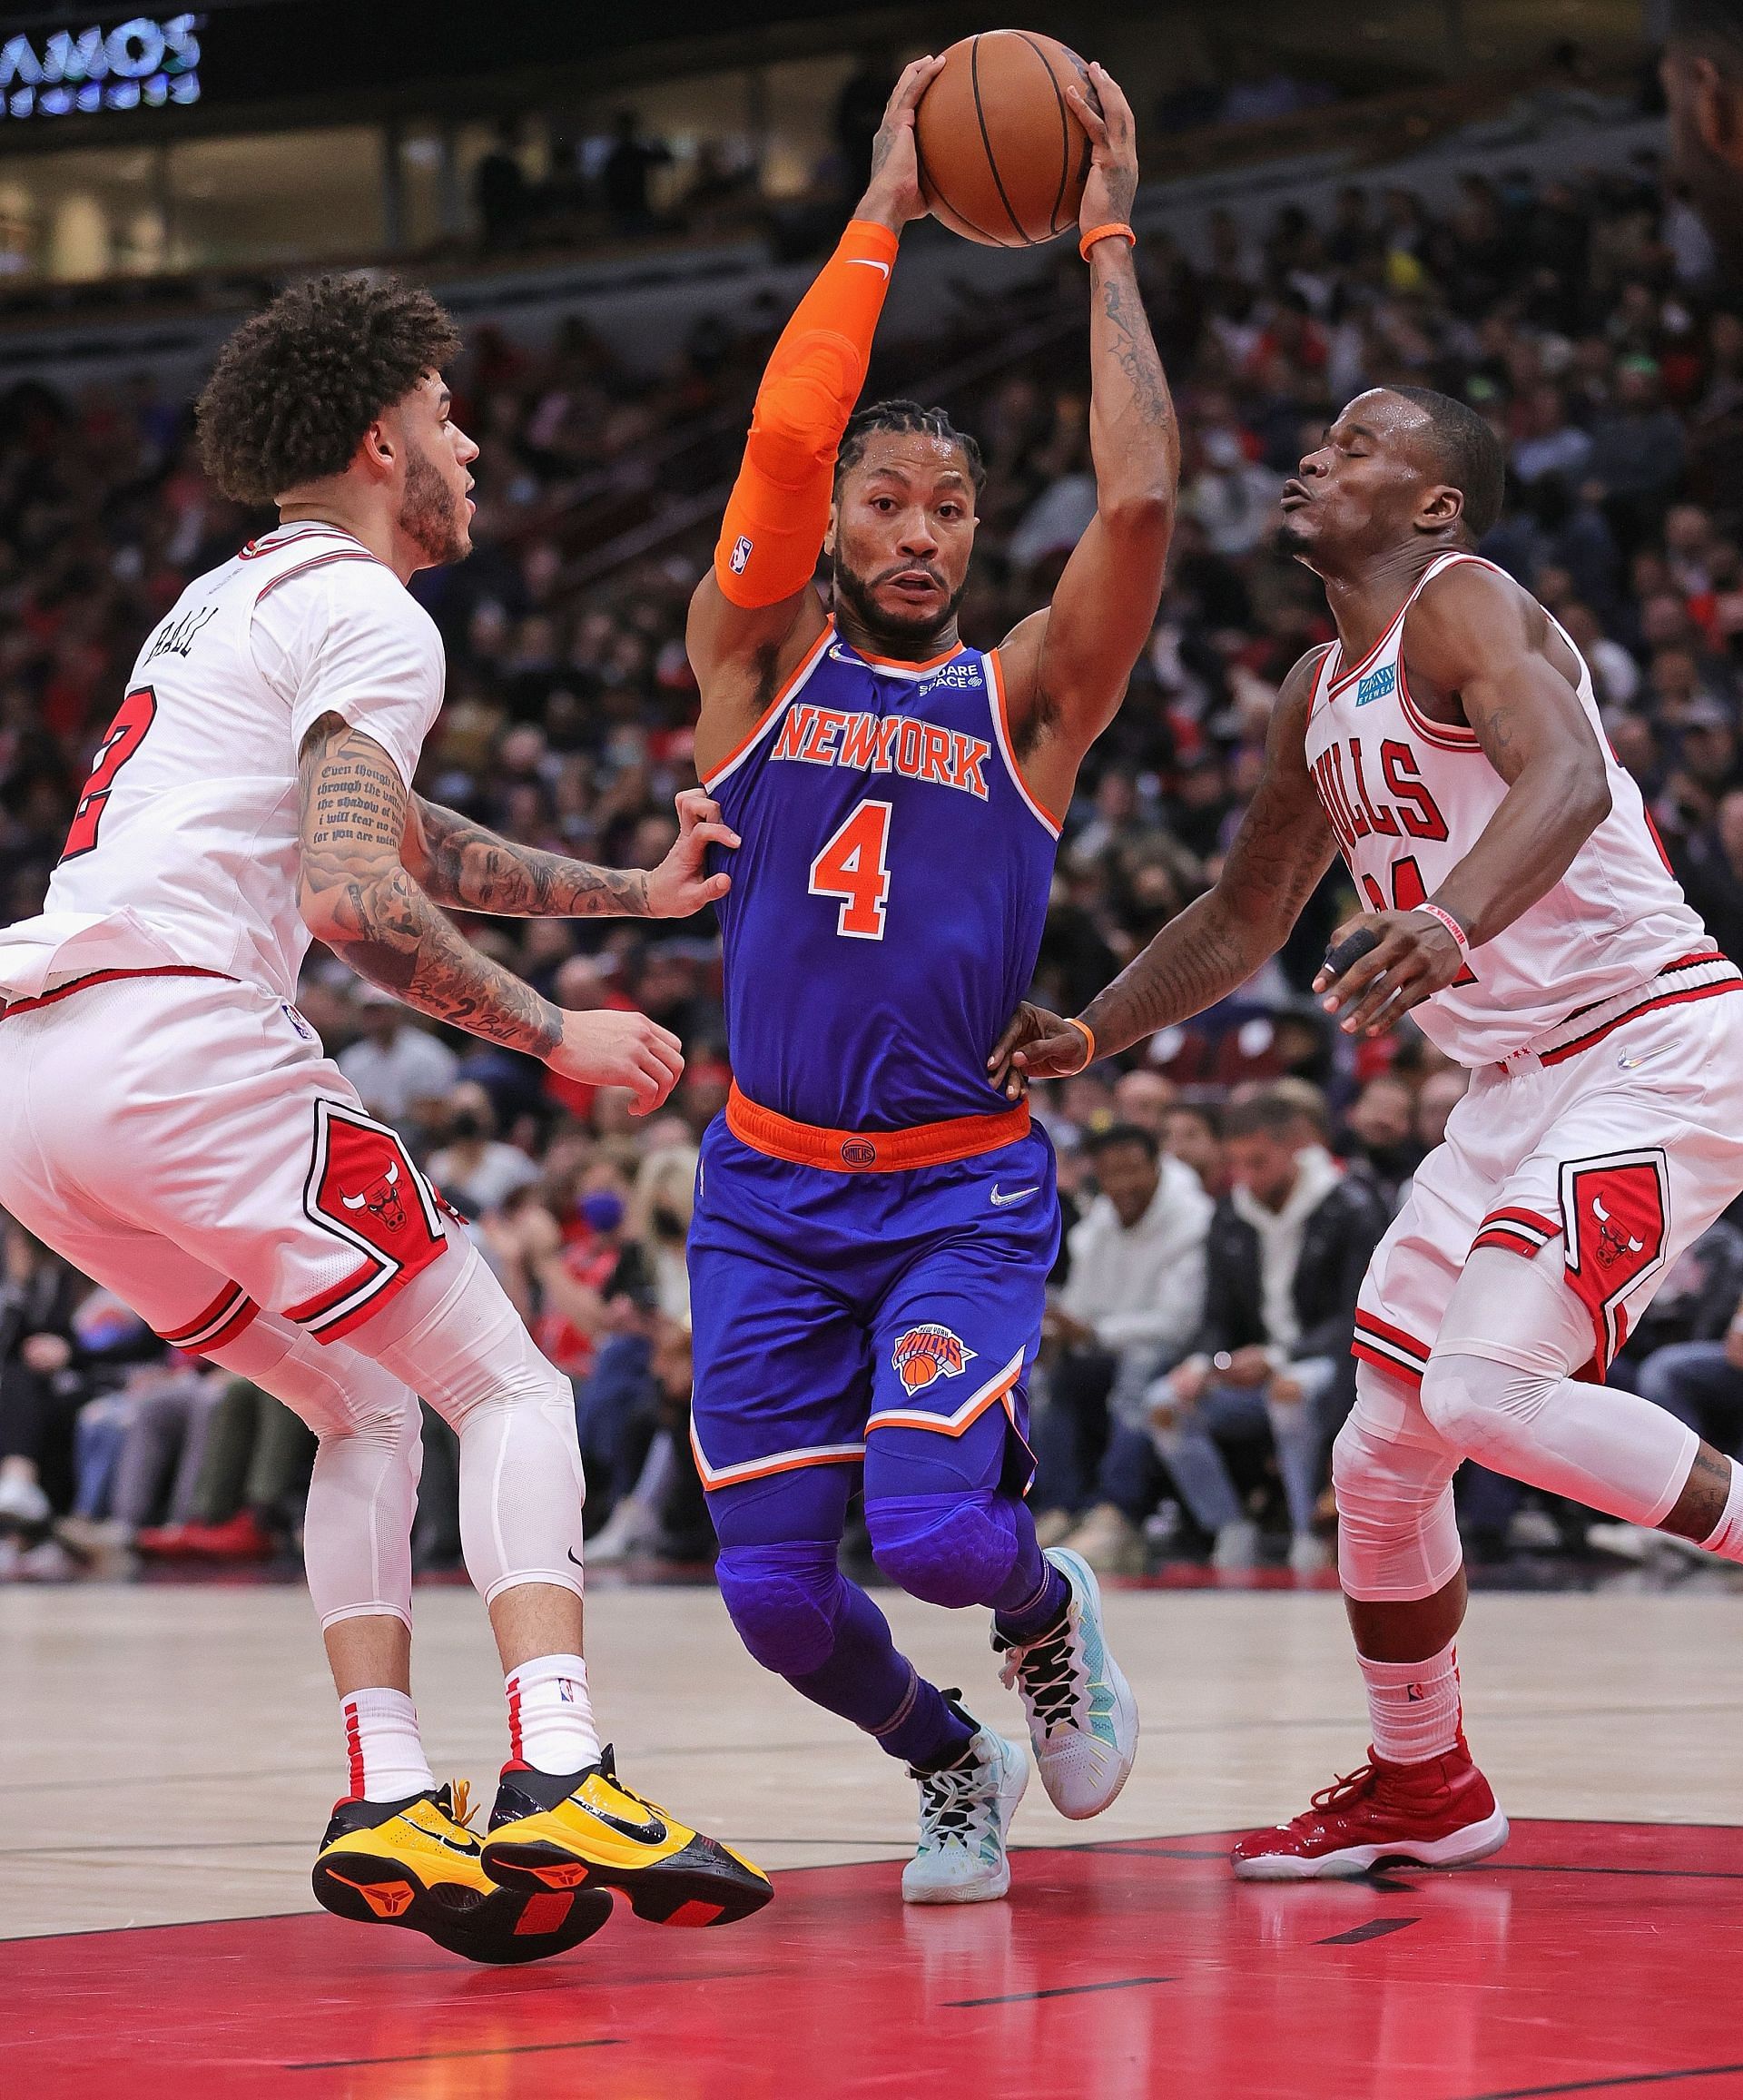 Knicks guard Derrick Rose battling against his old team